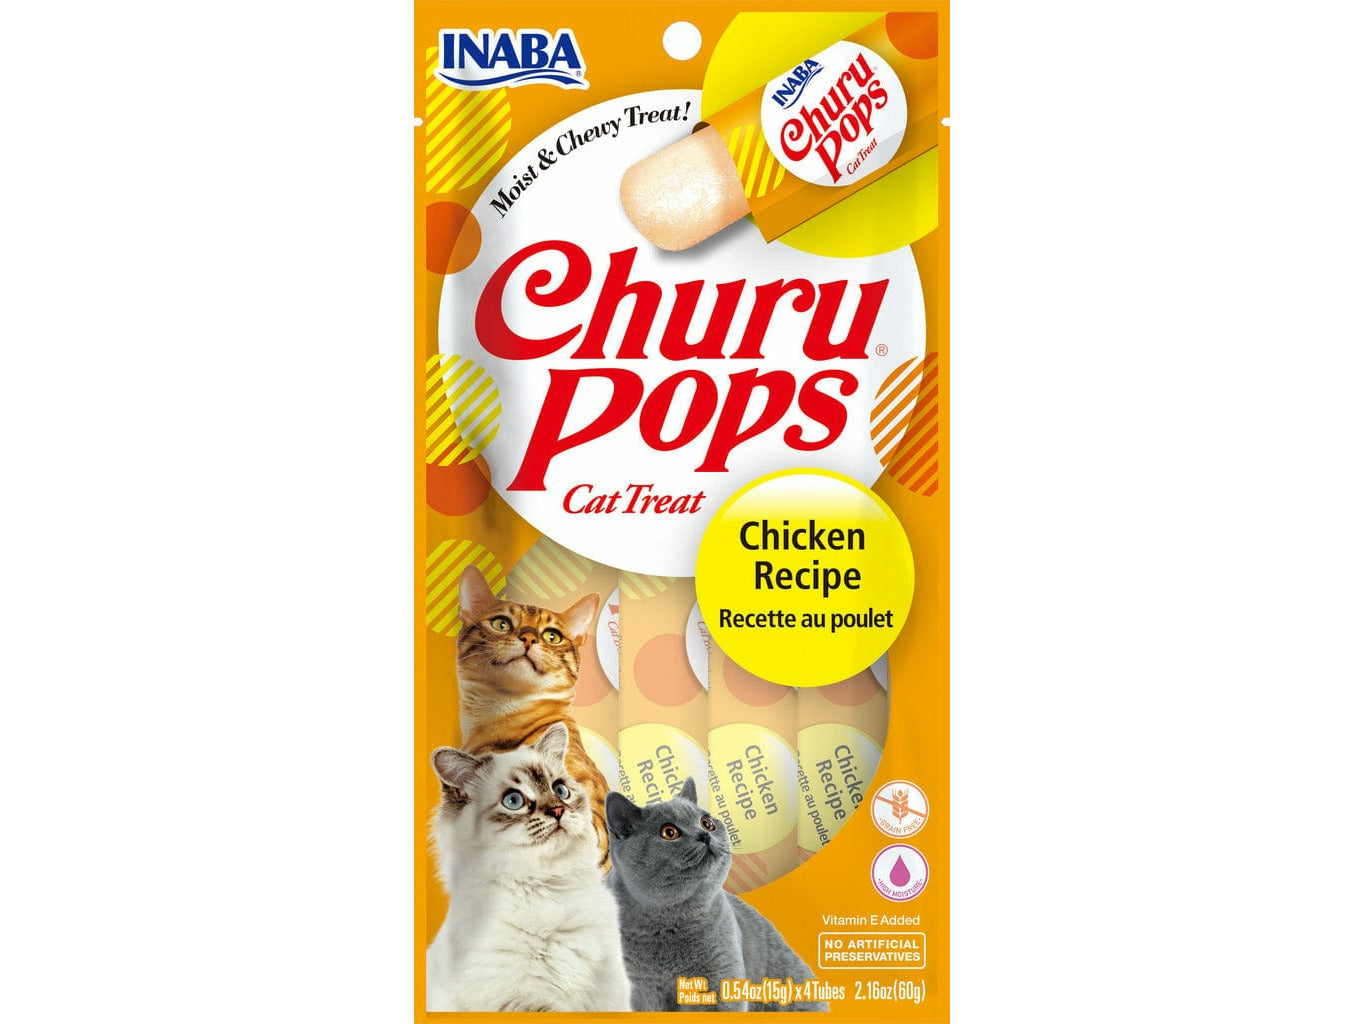 Churu Pops Chciken Recipe 15 g. x 4 pouches in 1 pack